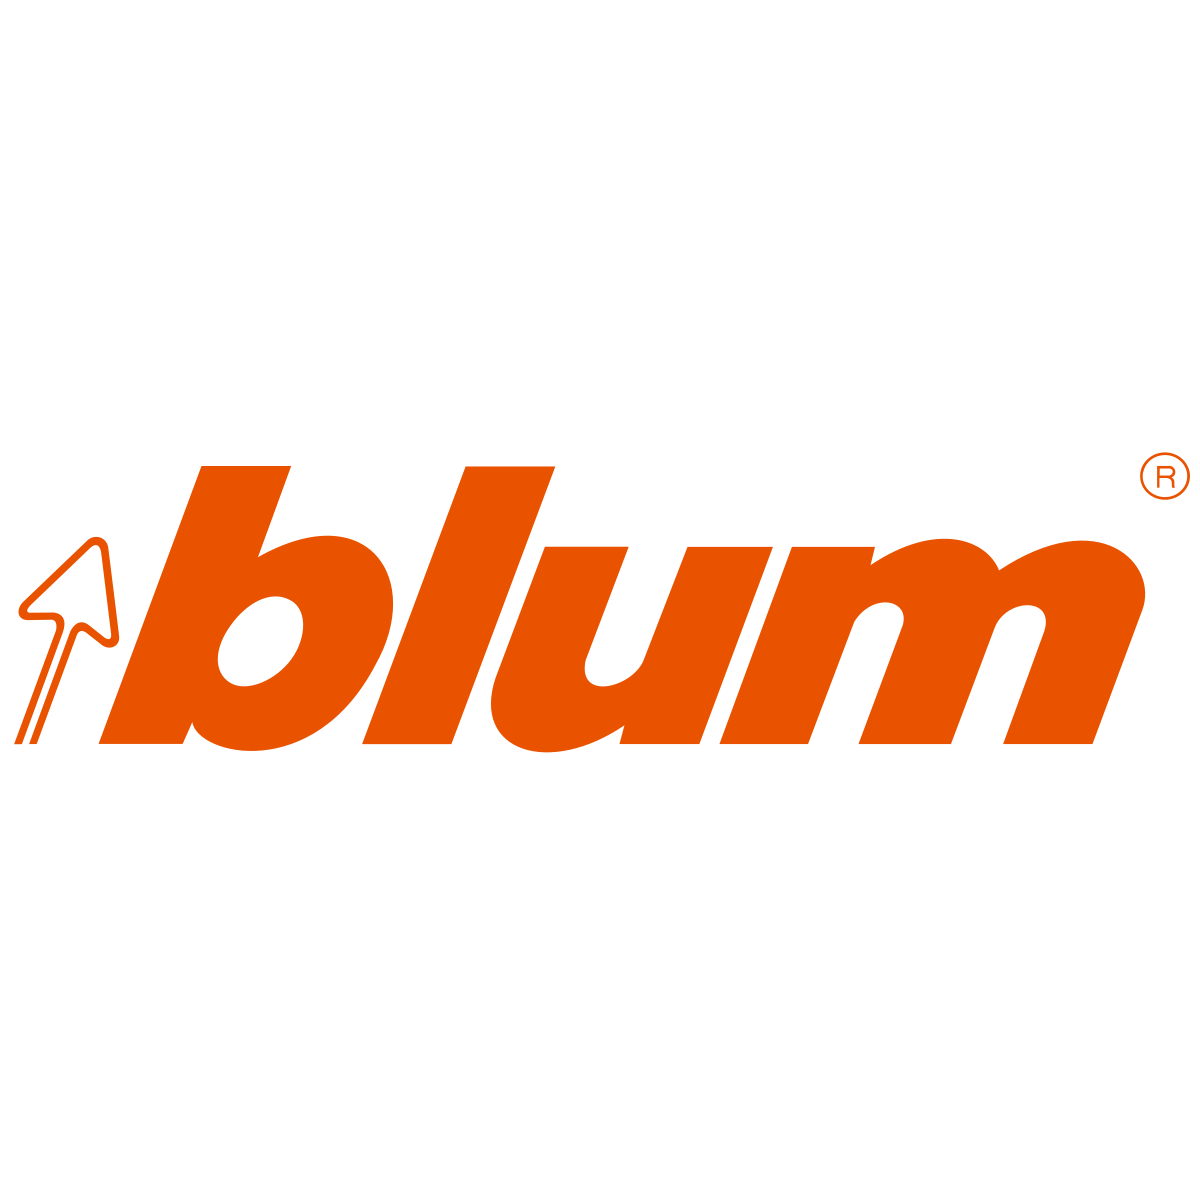 logo-blum